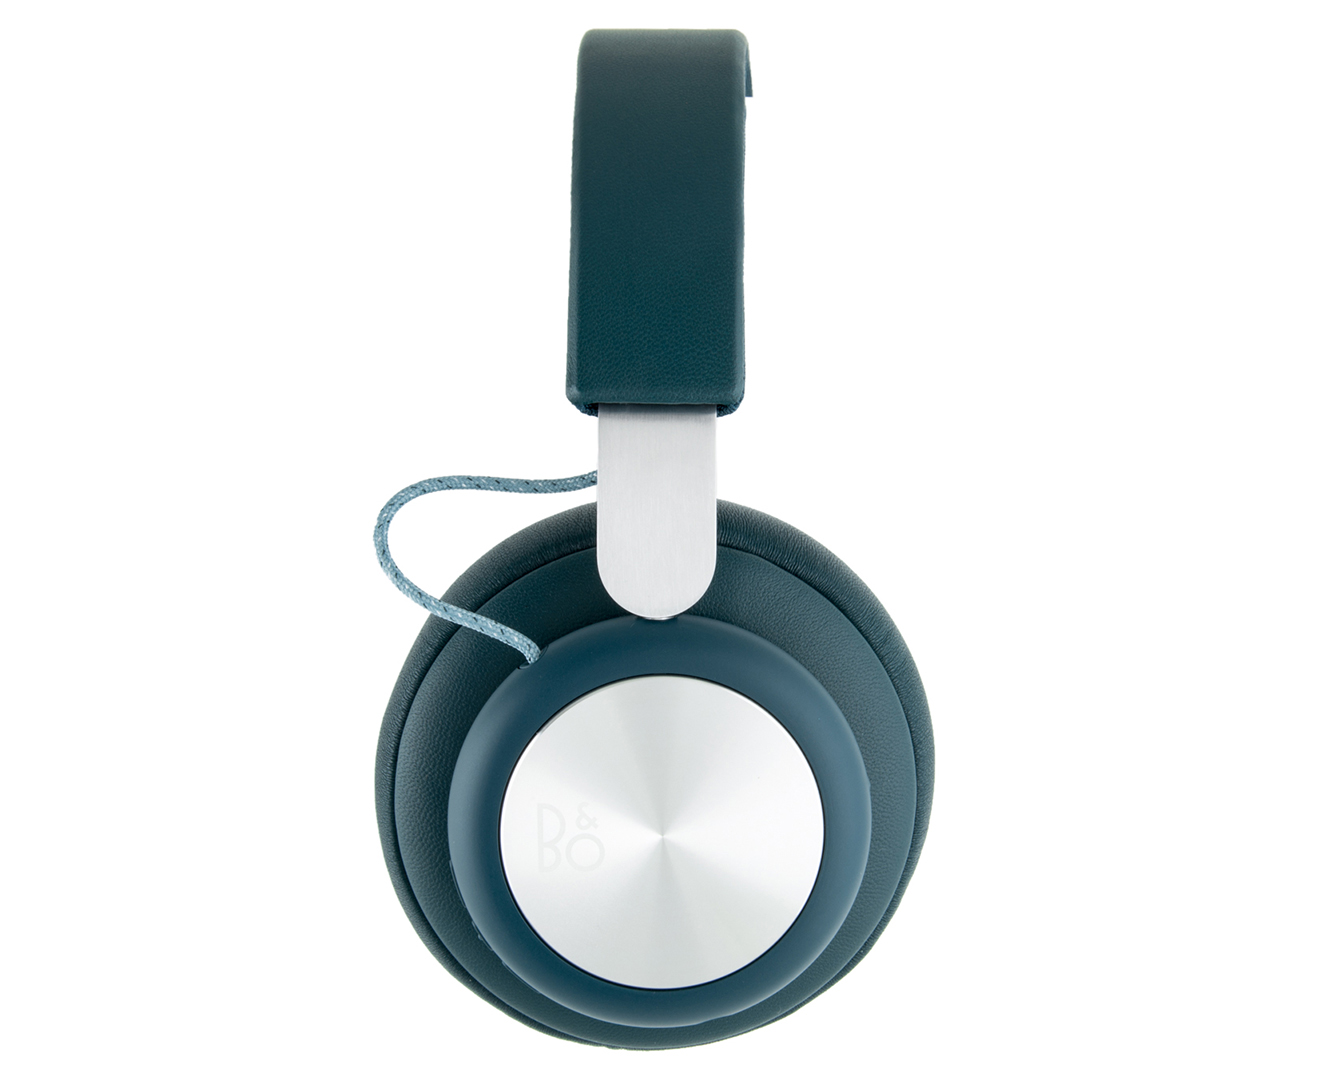 B&O Beoplay H4 Wireless Over-Ear Headset - Steel Blue | M.catch.com.au